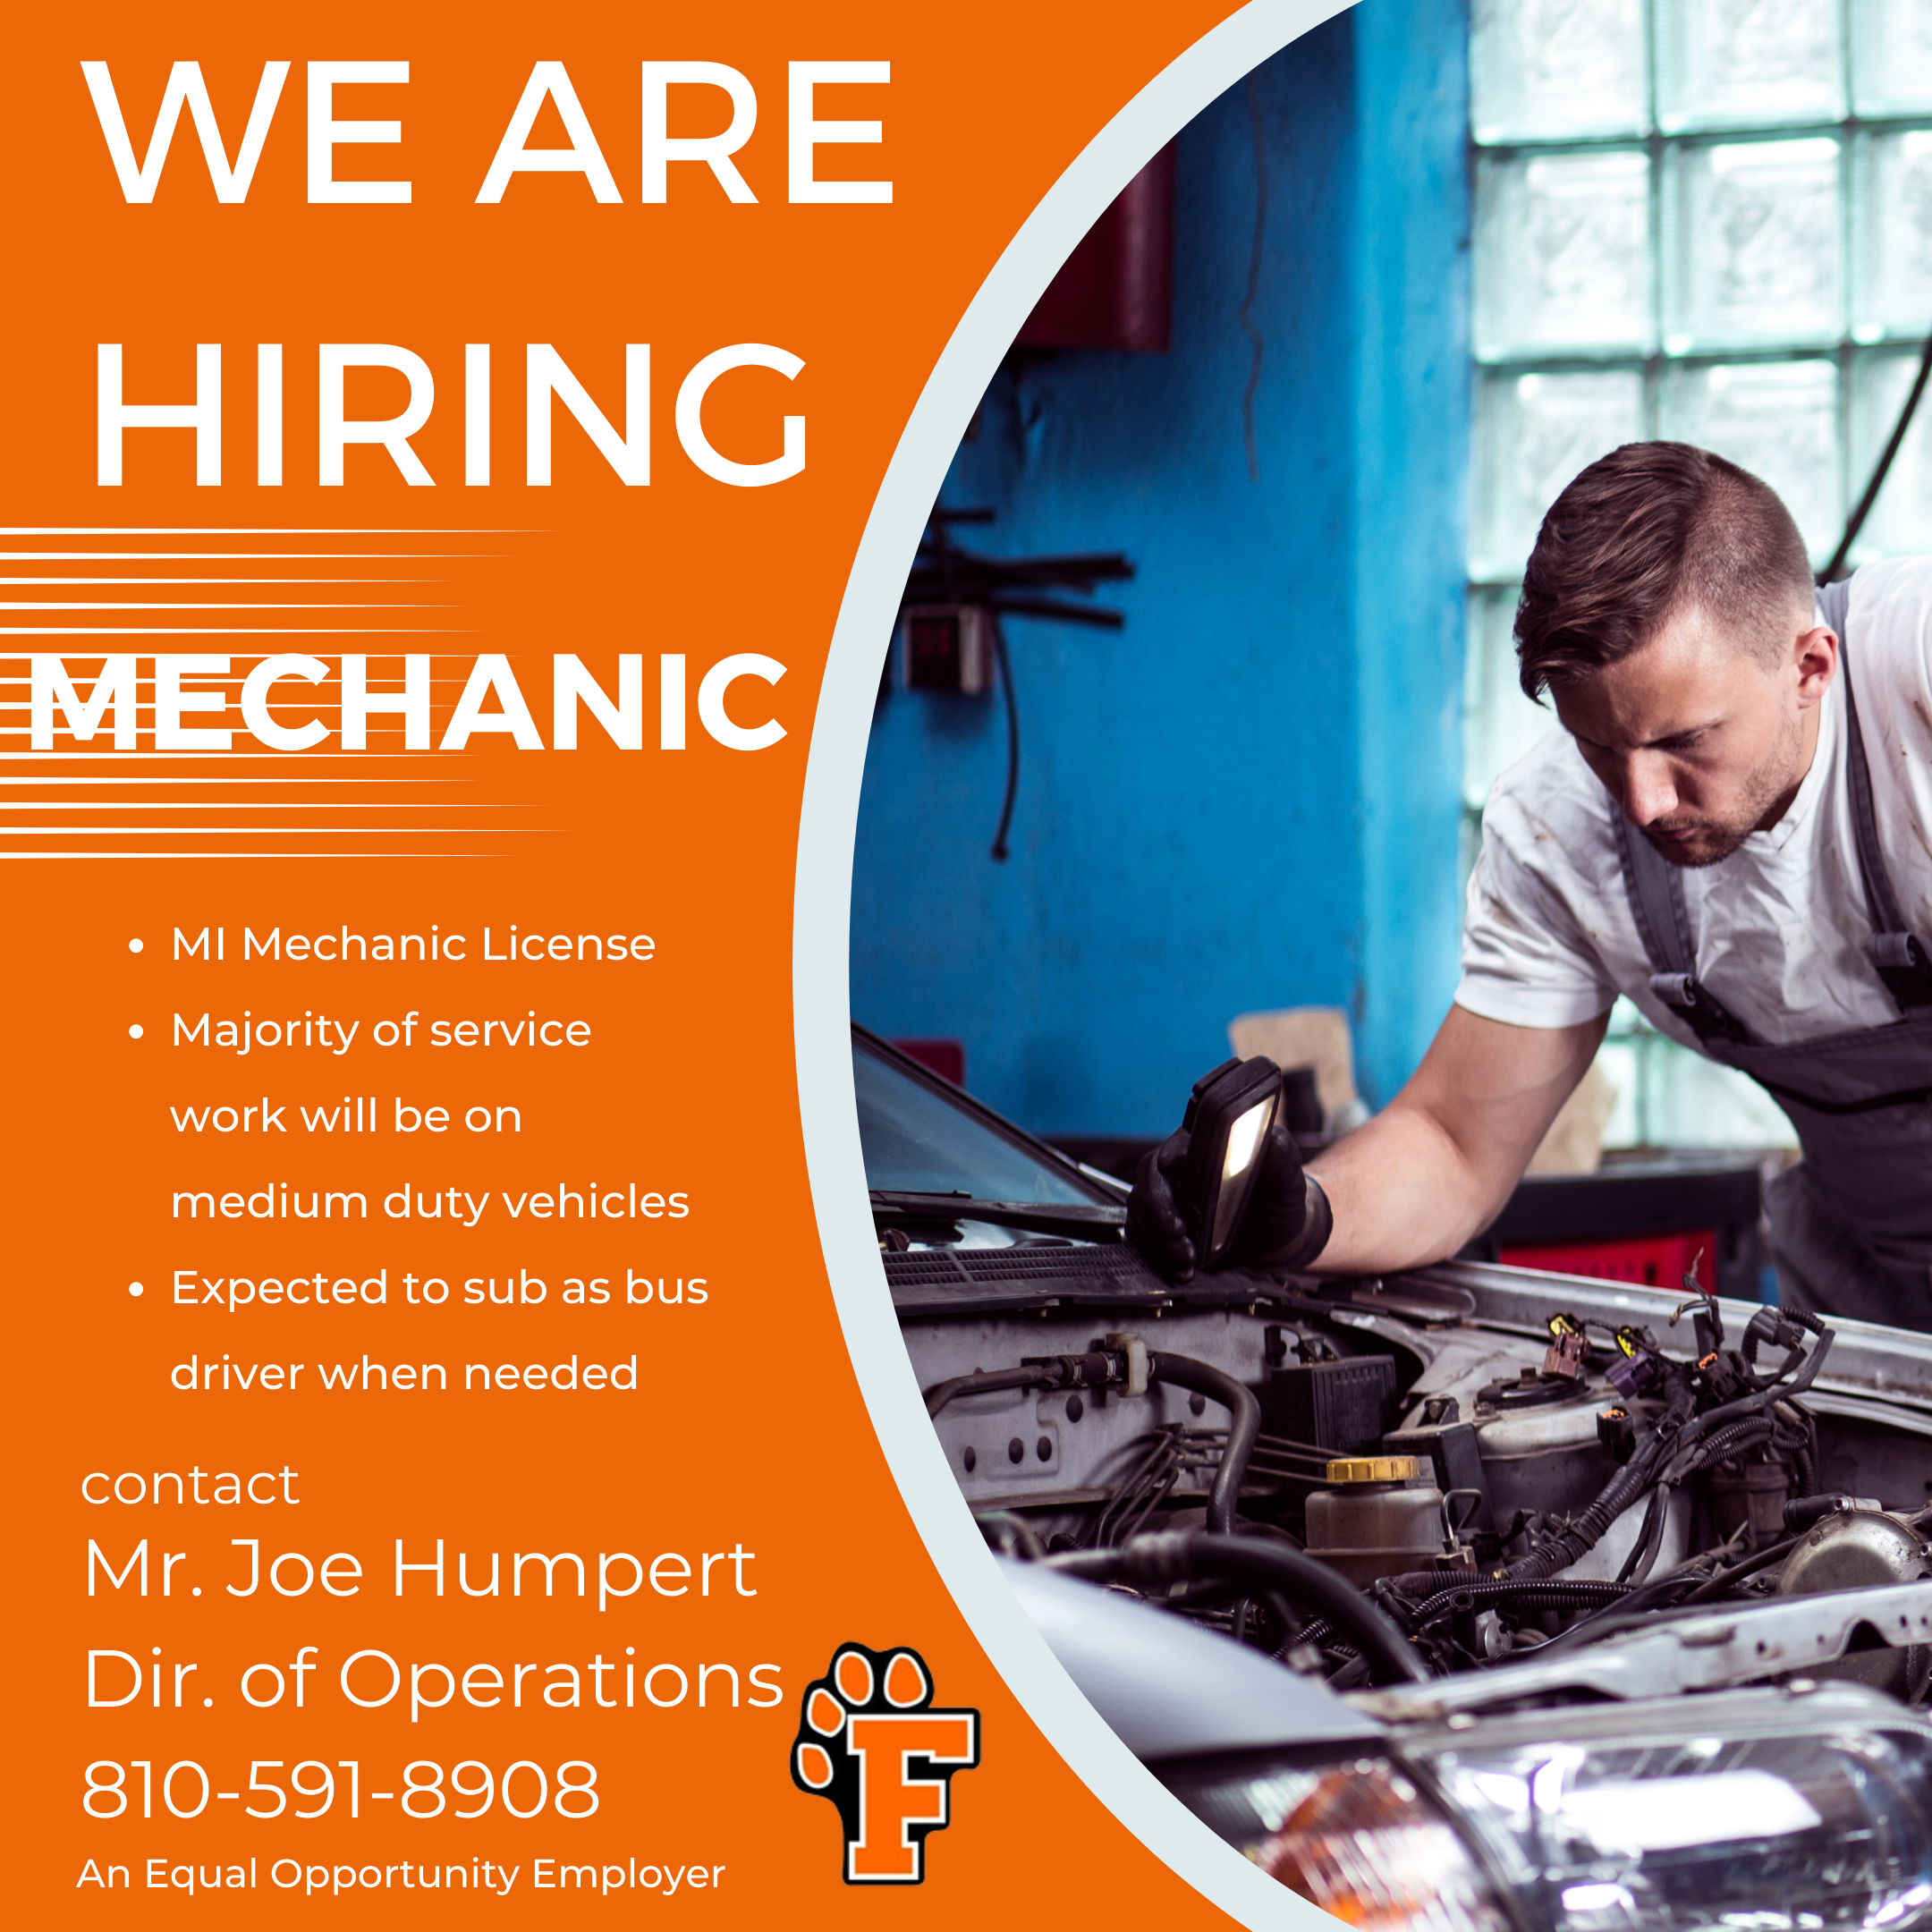 We Are Hiring - Mechanic Job Posting